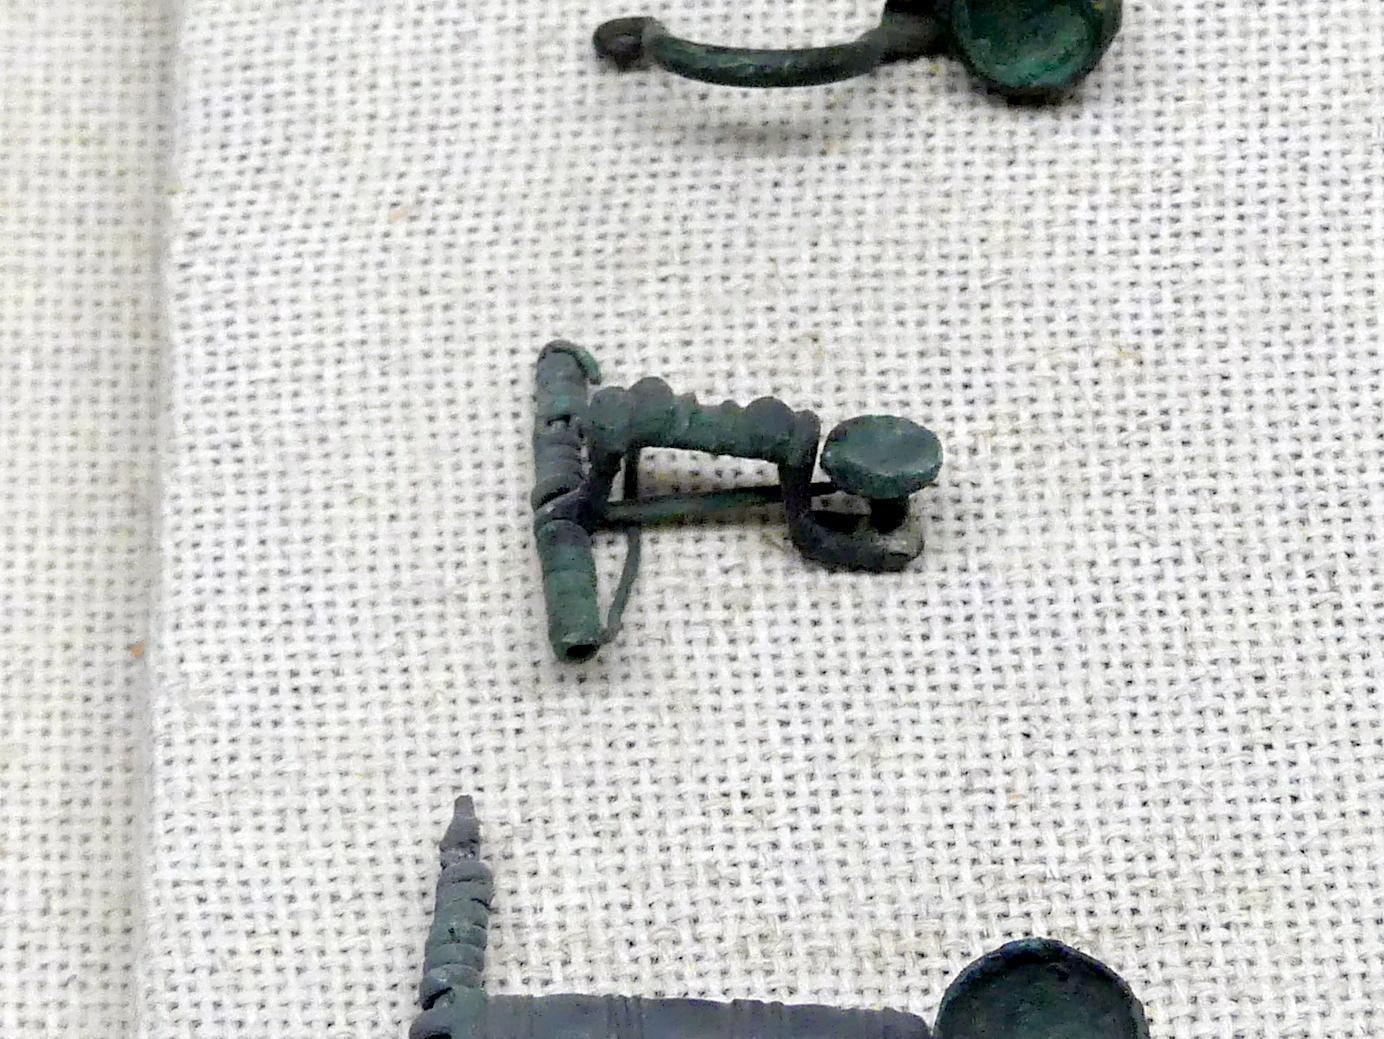 Fußzierfibel, Hallstattzeit, 700 - 200 v. Chr.